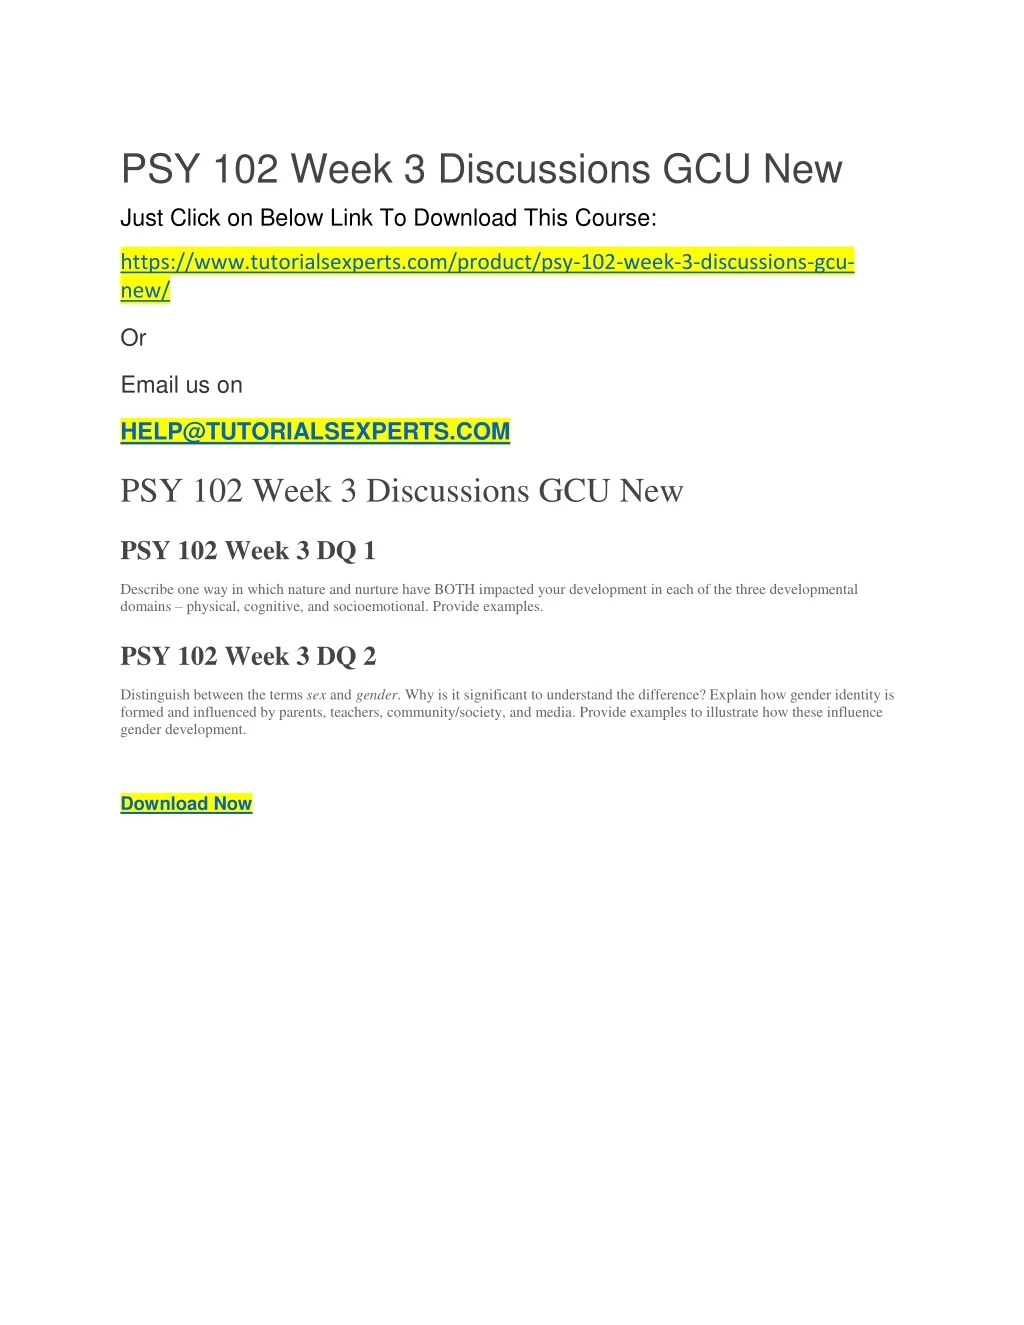 psy 102 week 3 discussions gcu new just click